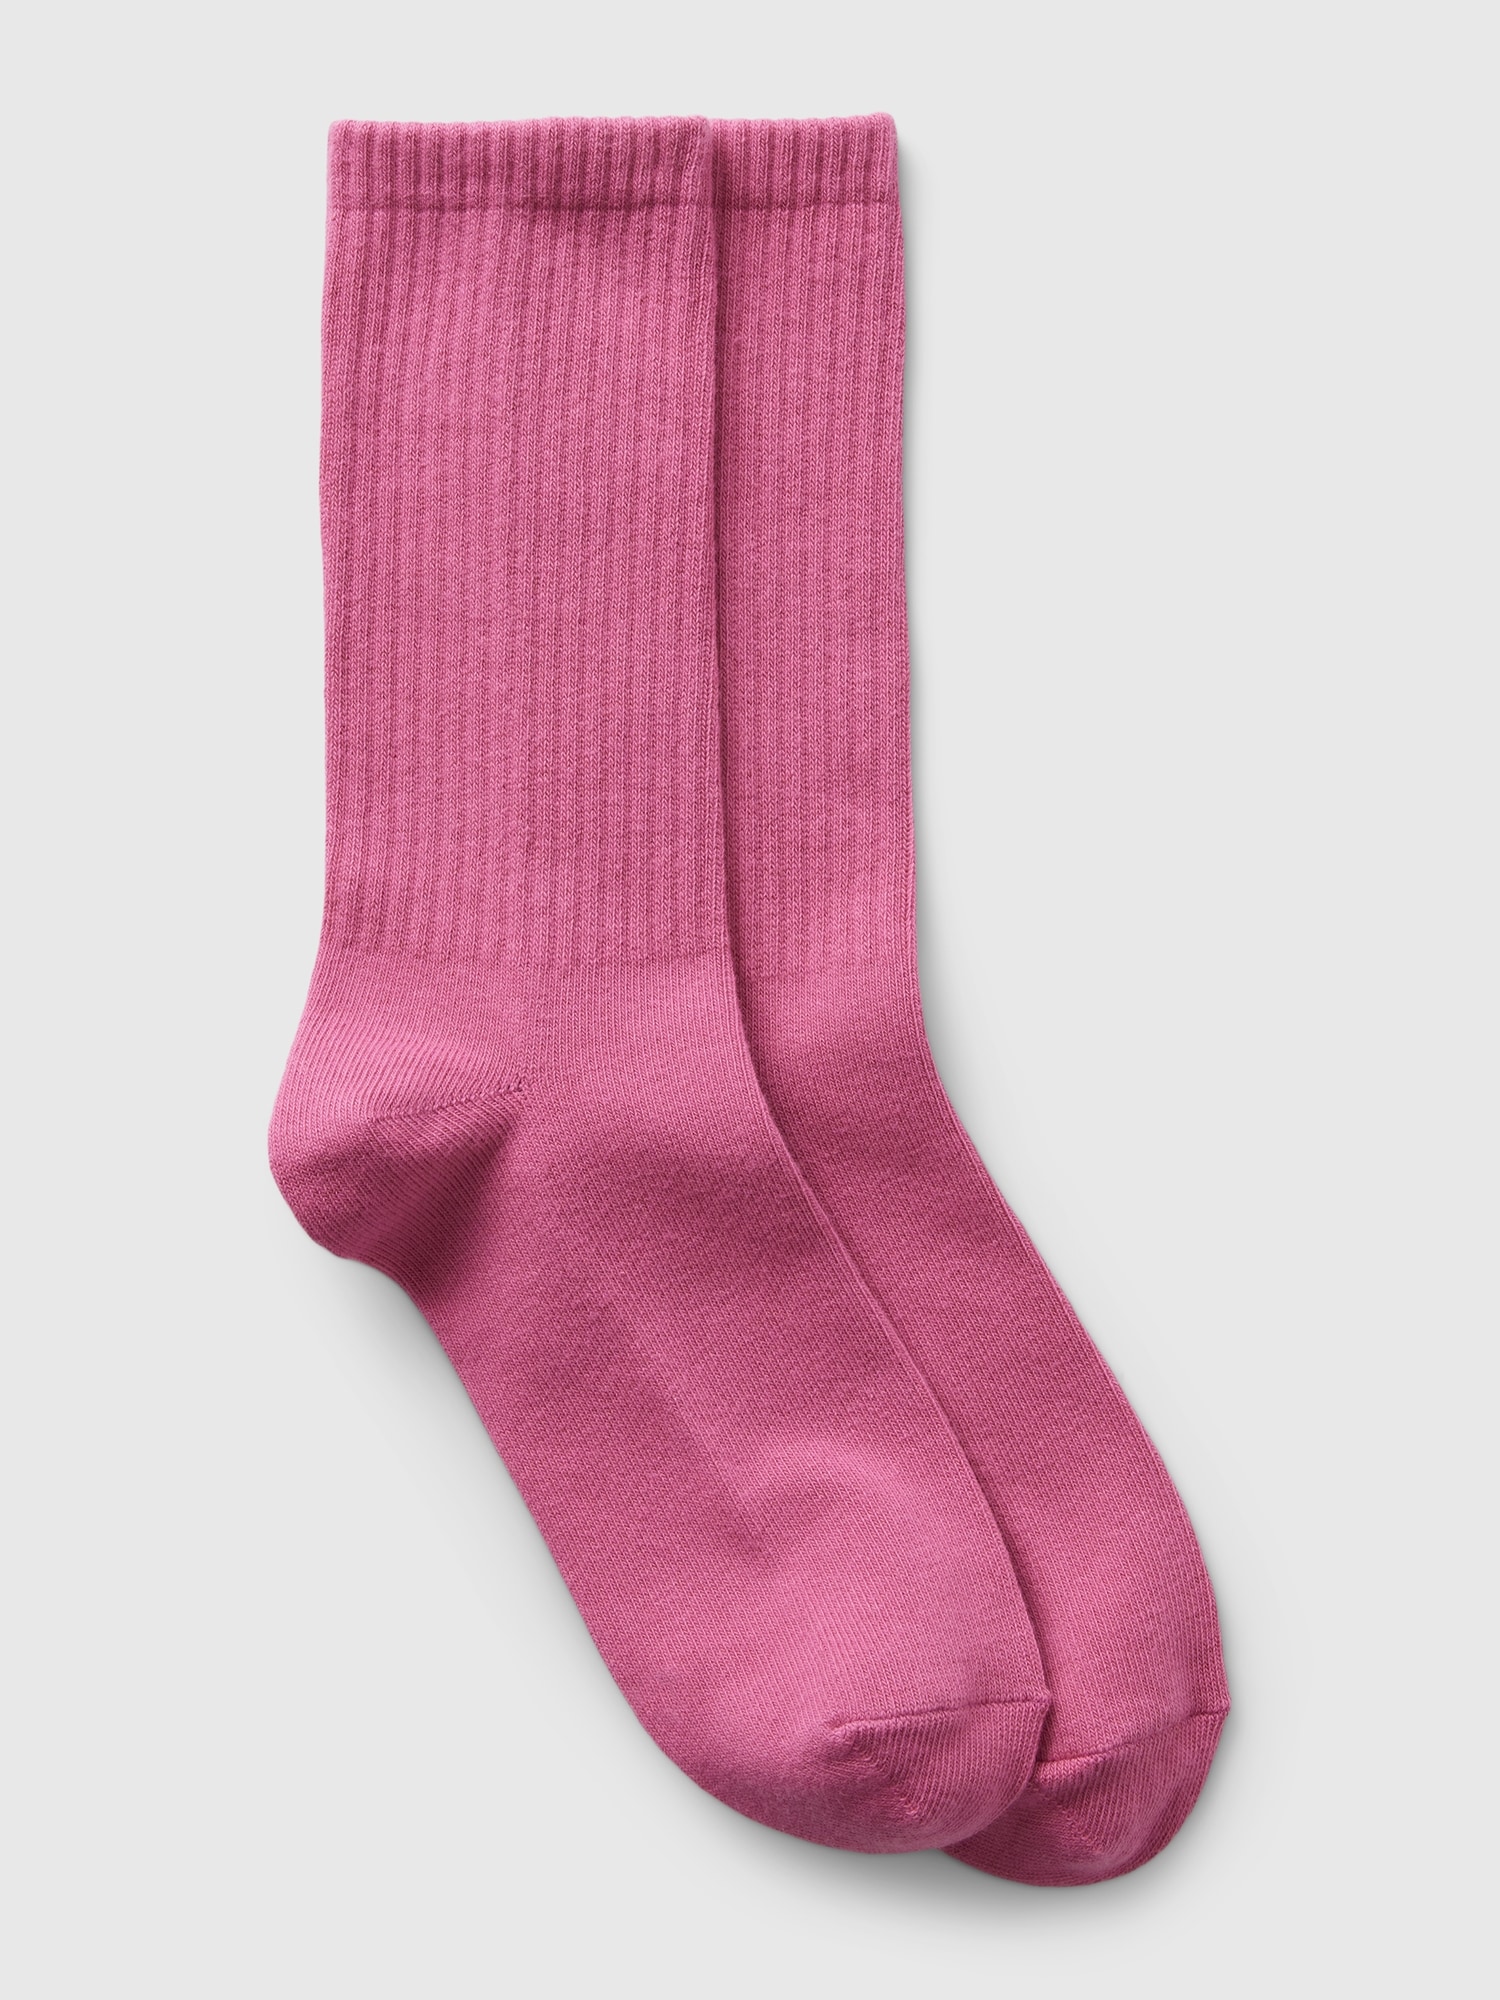 The Everyday Adult Socks, Organic Cotton